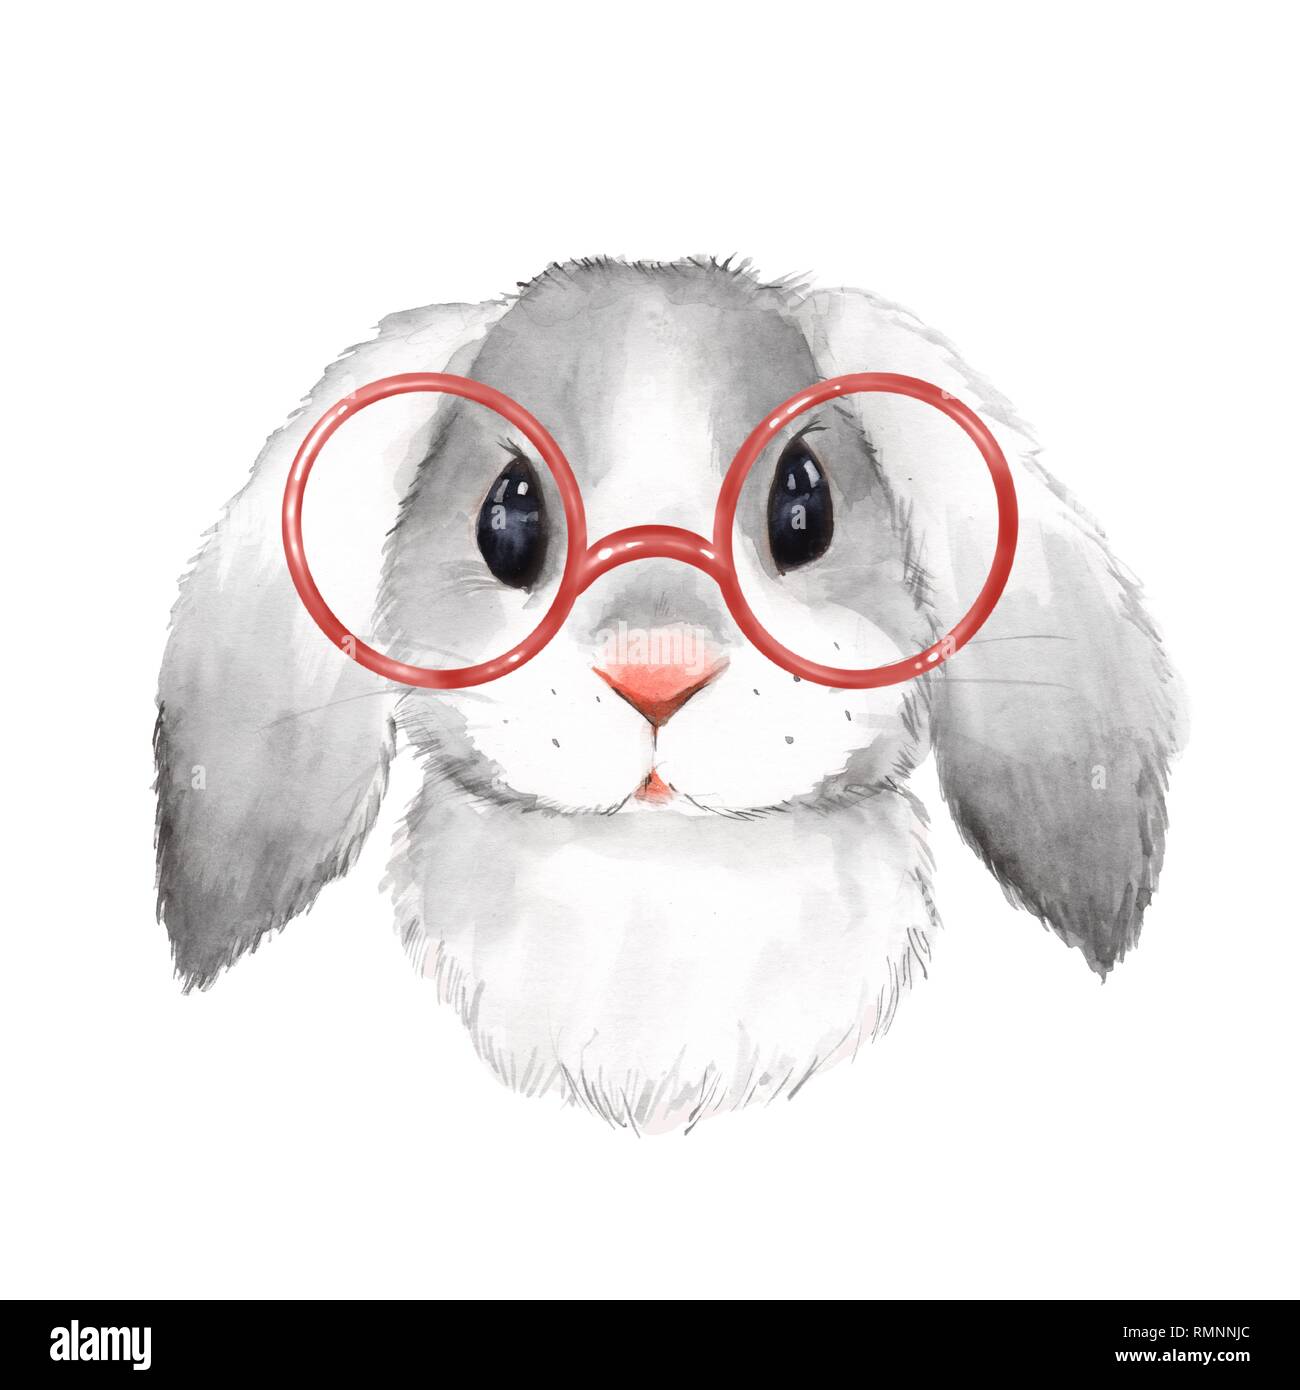 Watercolor portrait cute rabbit with glasses Stock Photo